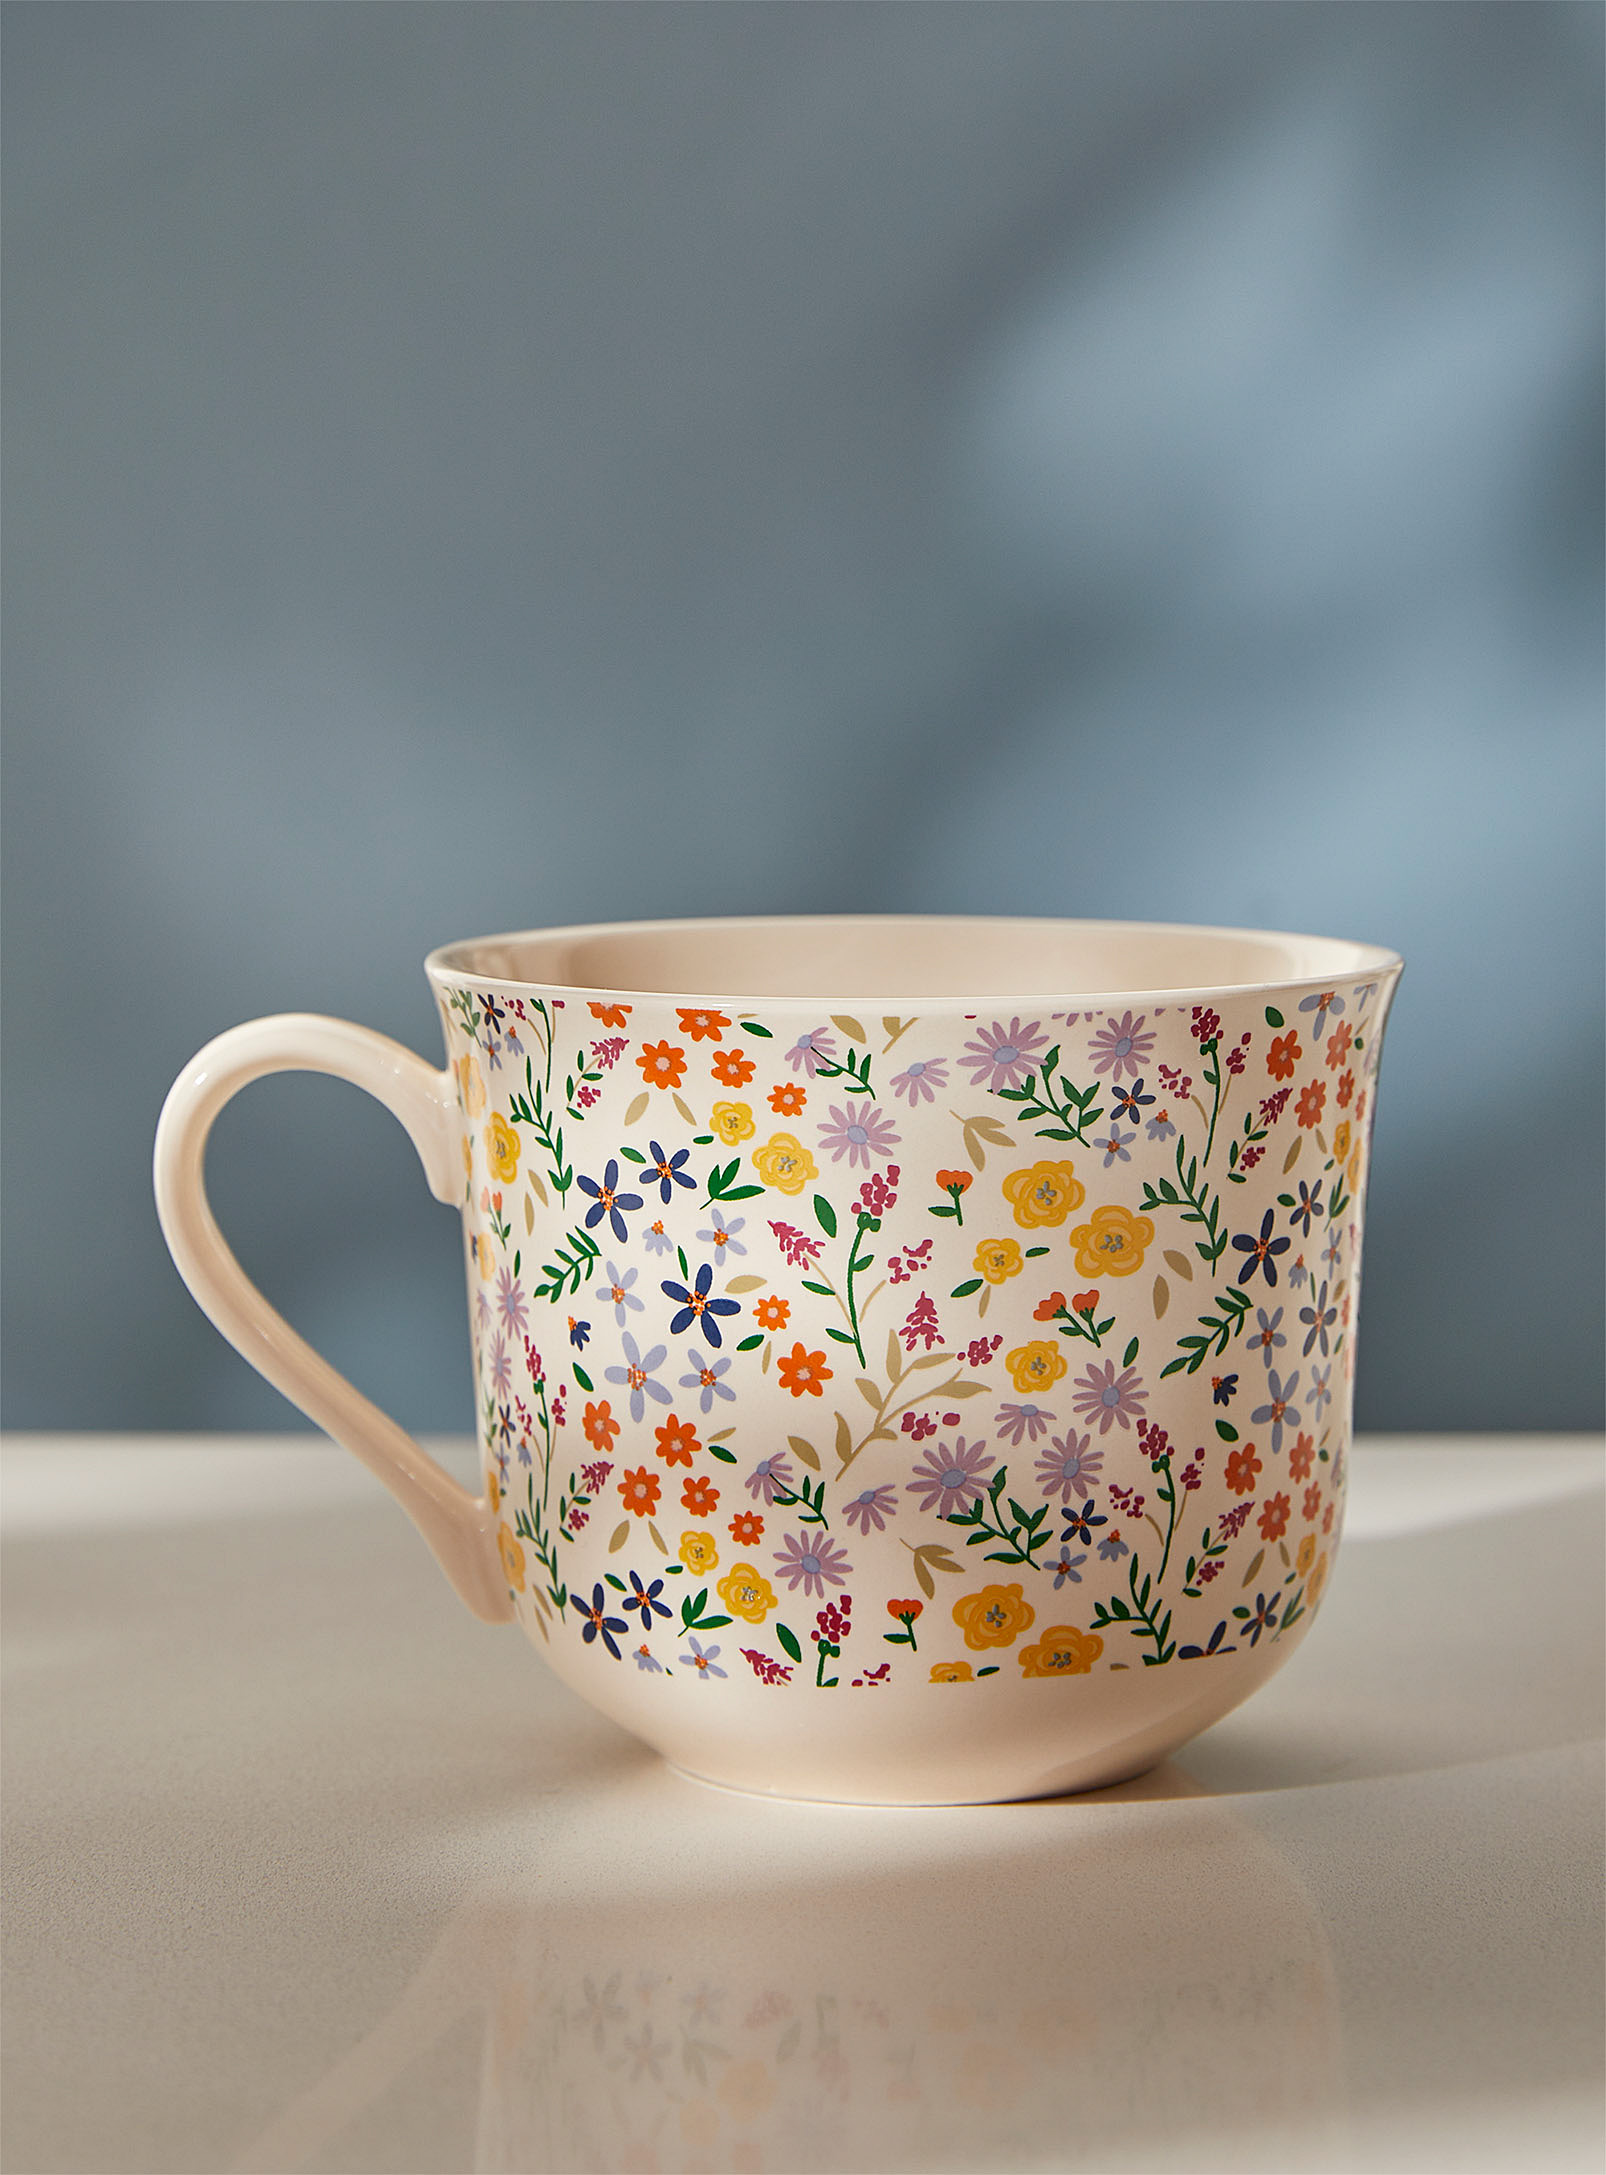 Simons Maison - Countryside flowers mug